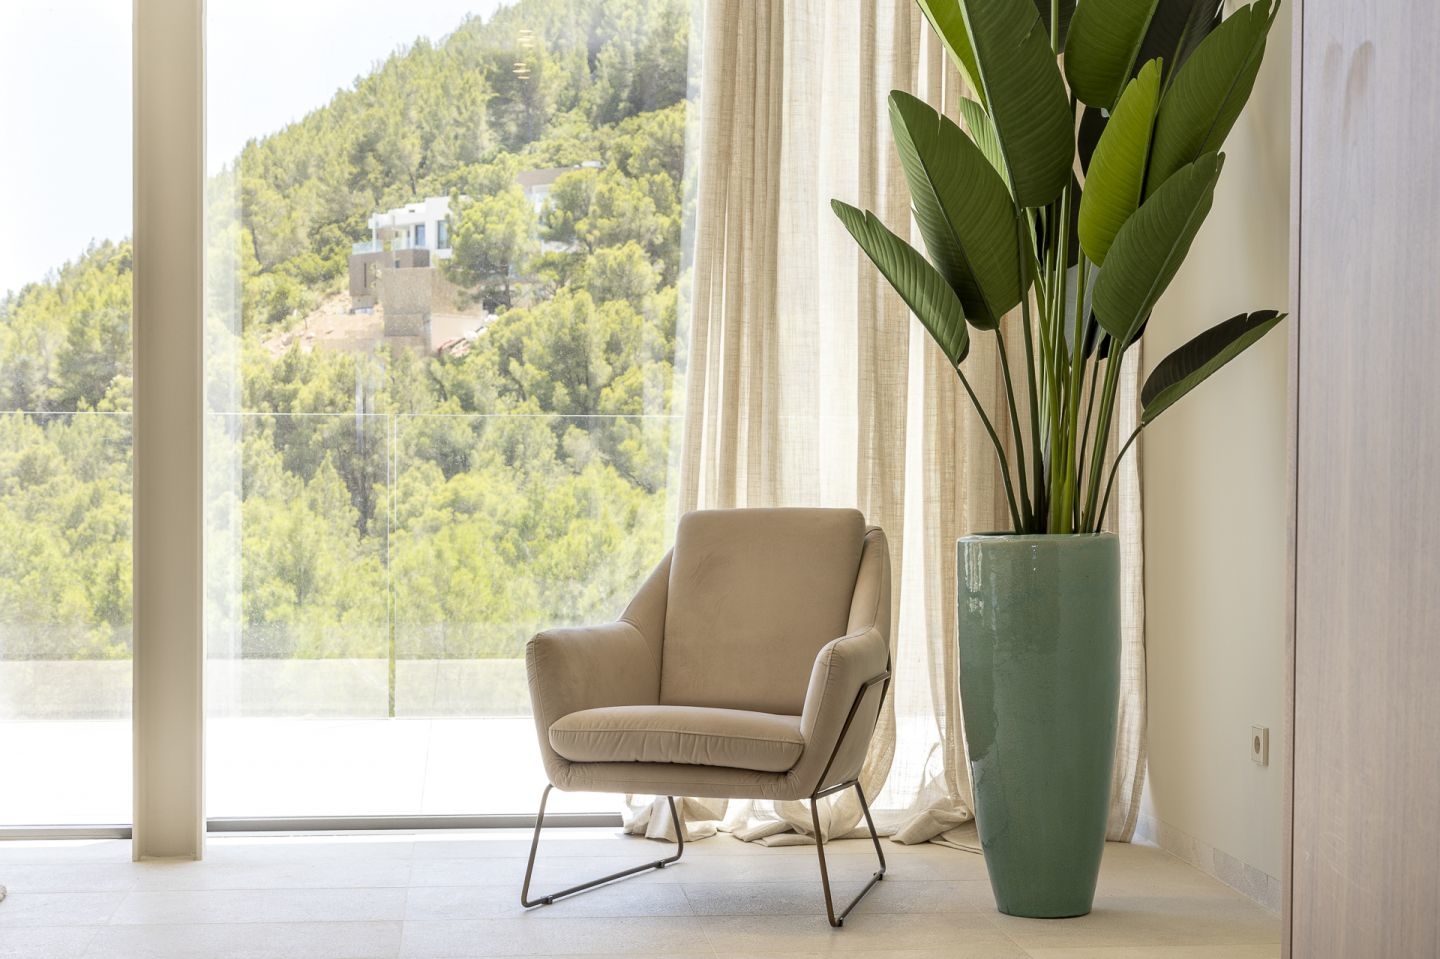 Superb luxury villa in Son Vida with panoramic views